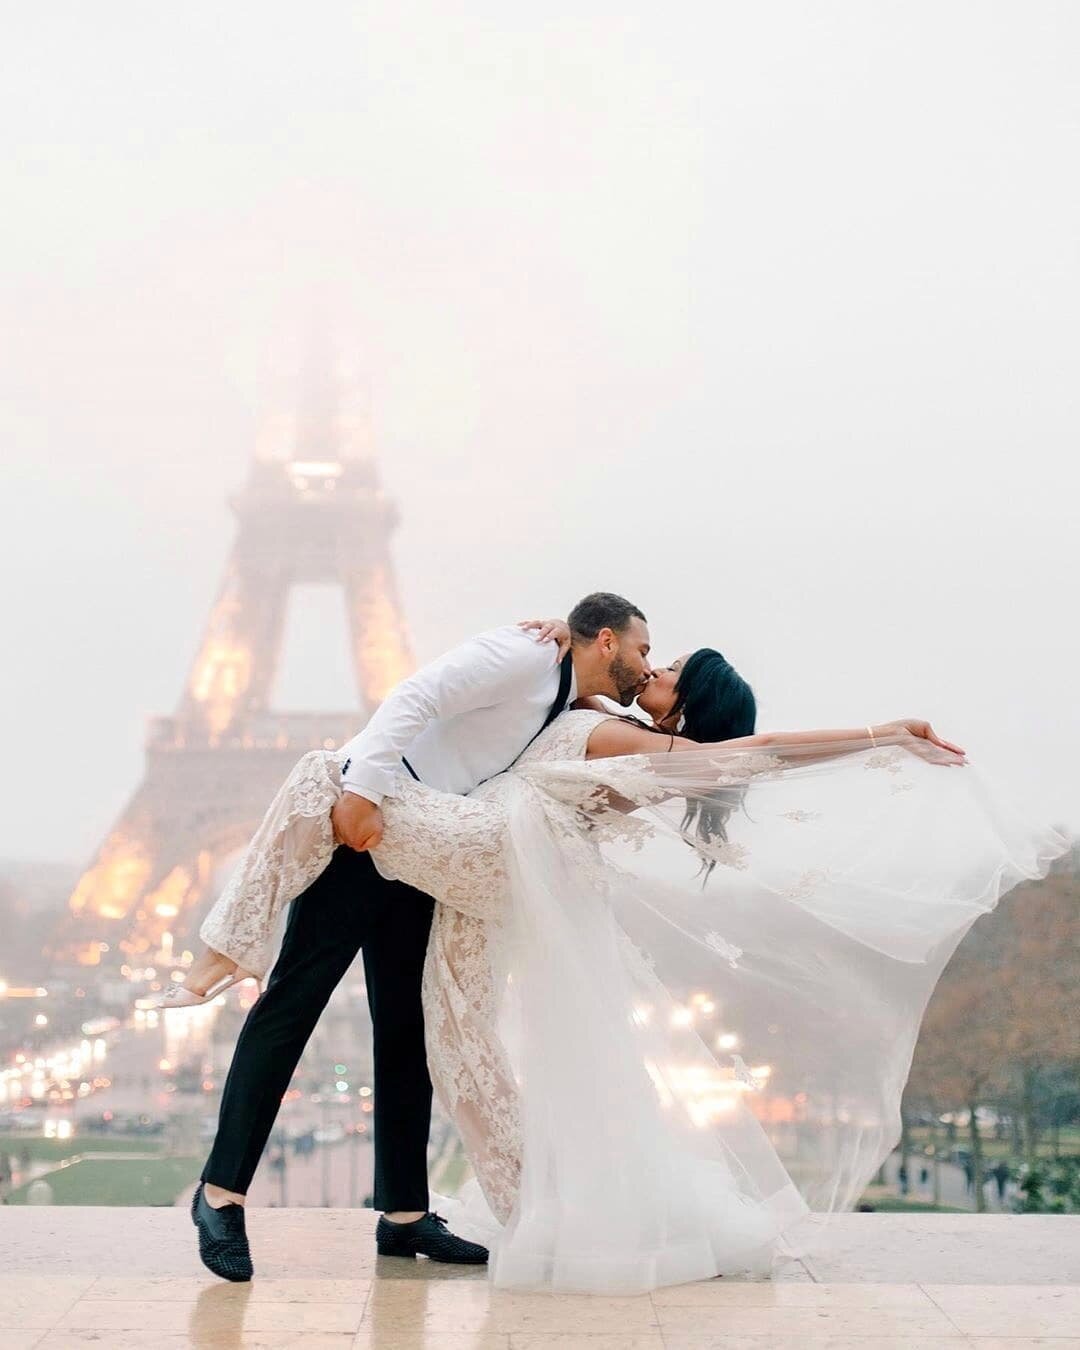 An elopement in Paris 🇫🇷 
@brittneyshipptv
.
.
.
.
.
✂Alterations📍 

💒👗
▪︎take in side seams on bust
▪︎shorten halter straps 
▪︎adjust waistband on detachable skirt
▪︎hand sew beading &amp; lace detail on garment